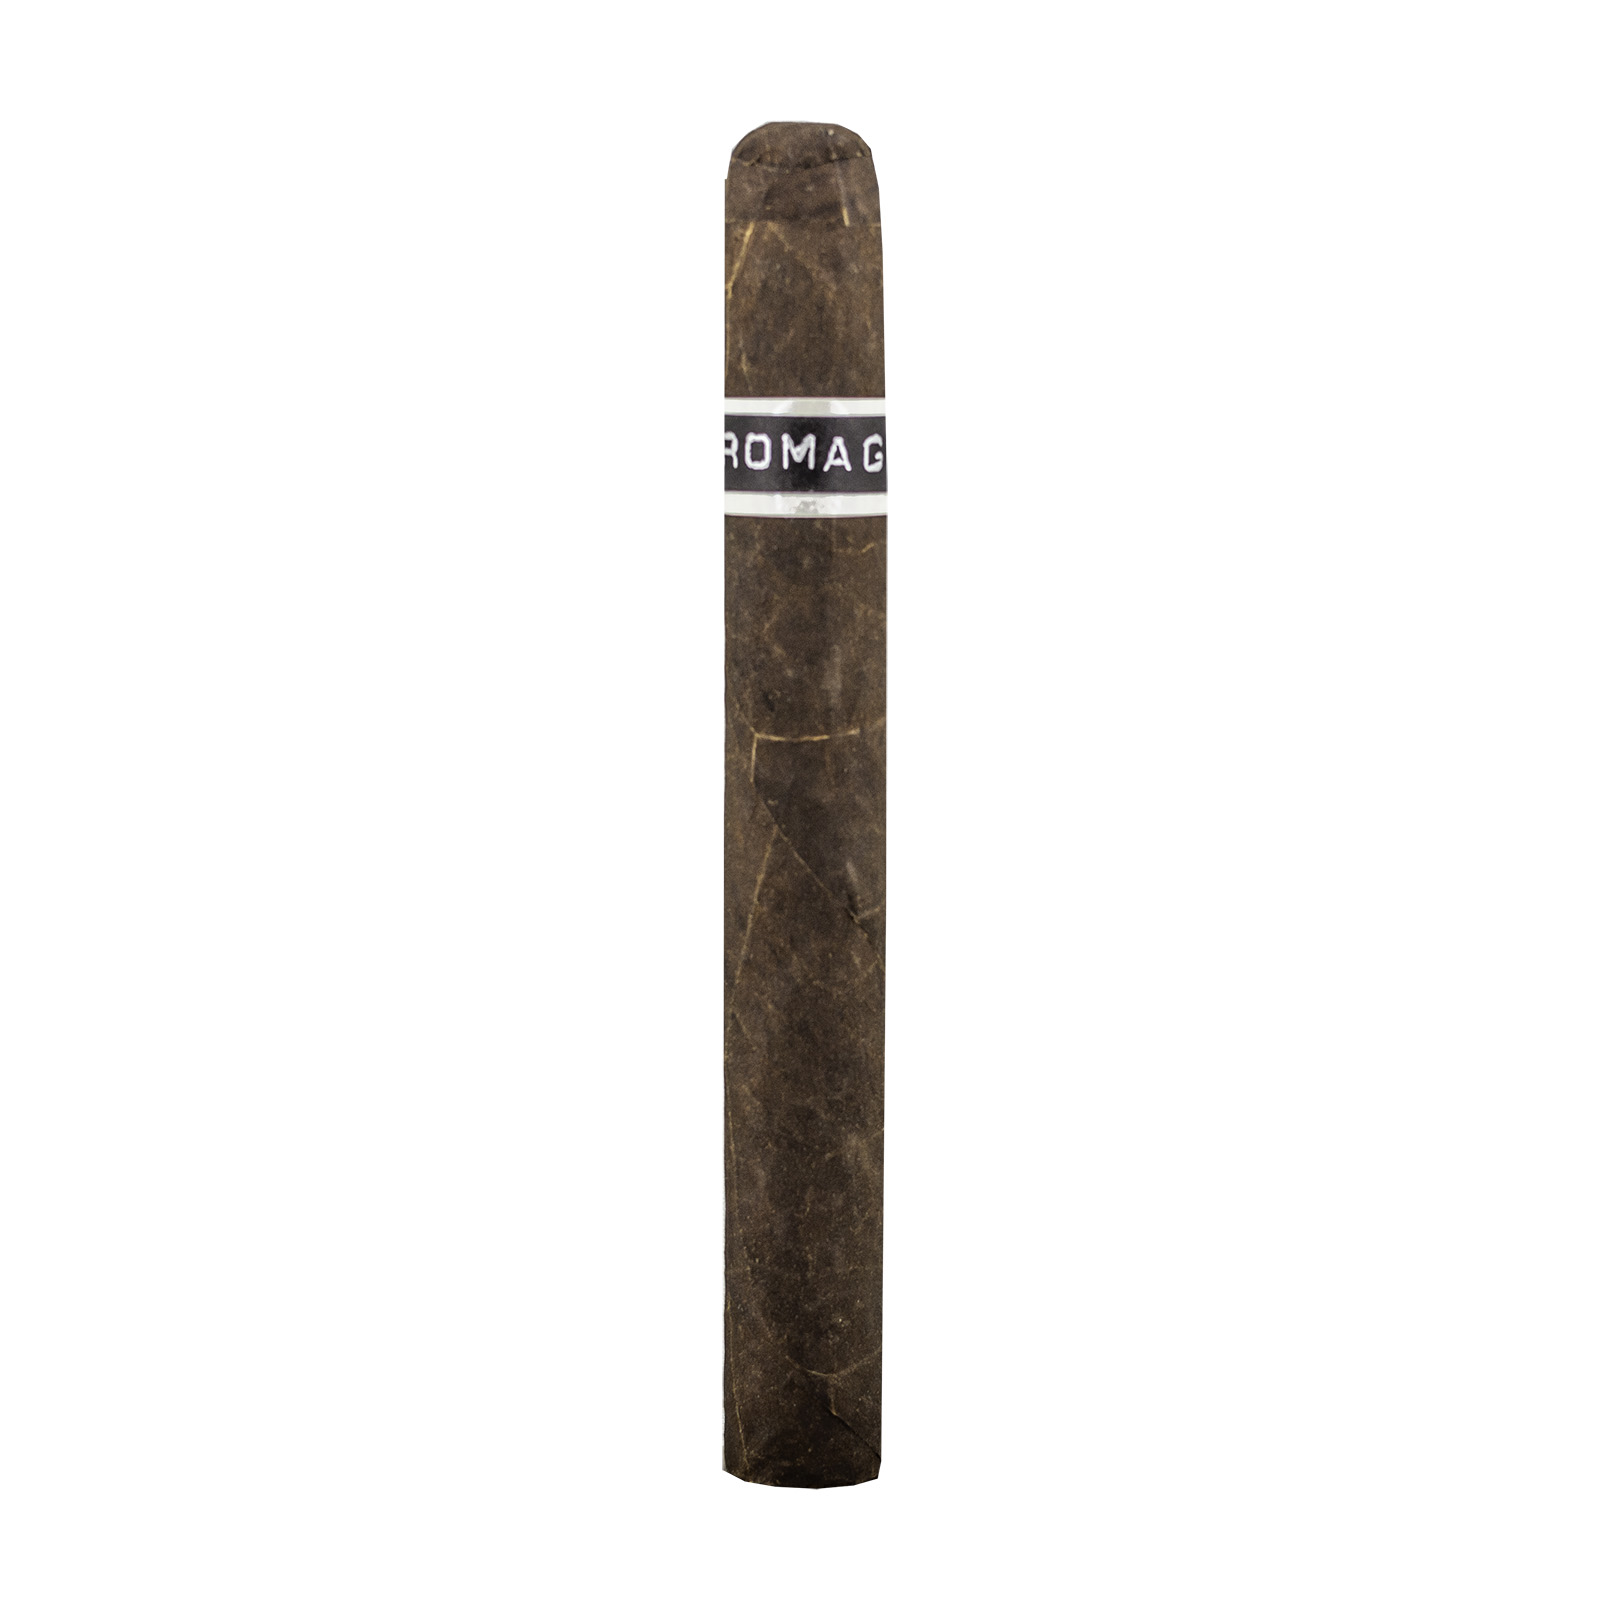 CroMagnon PA Anthropology Cigar - Single